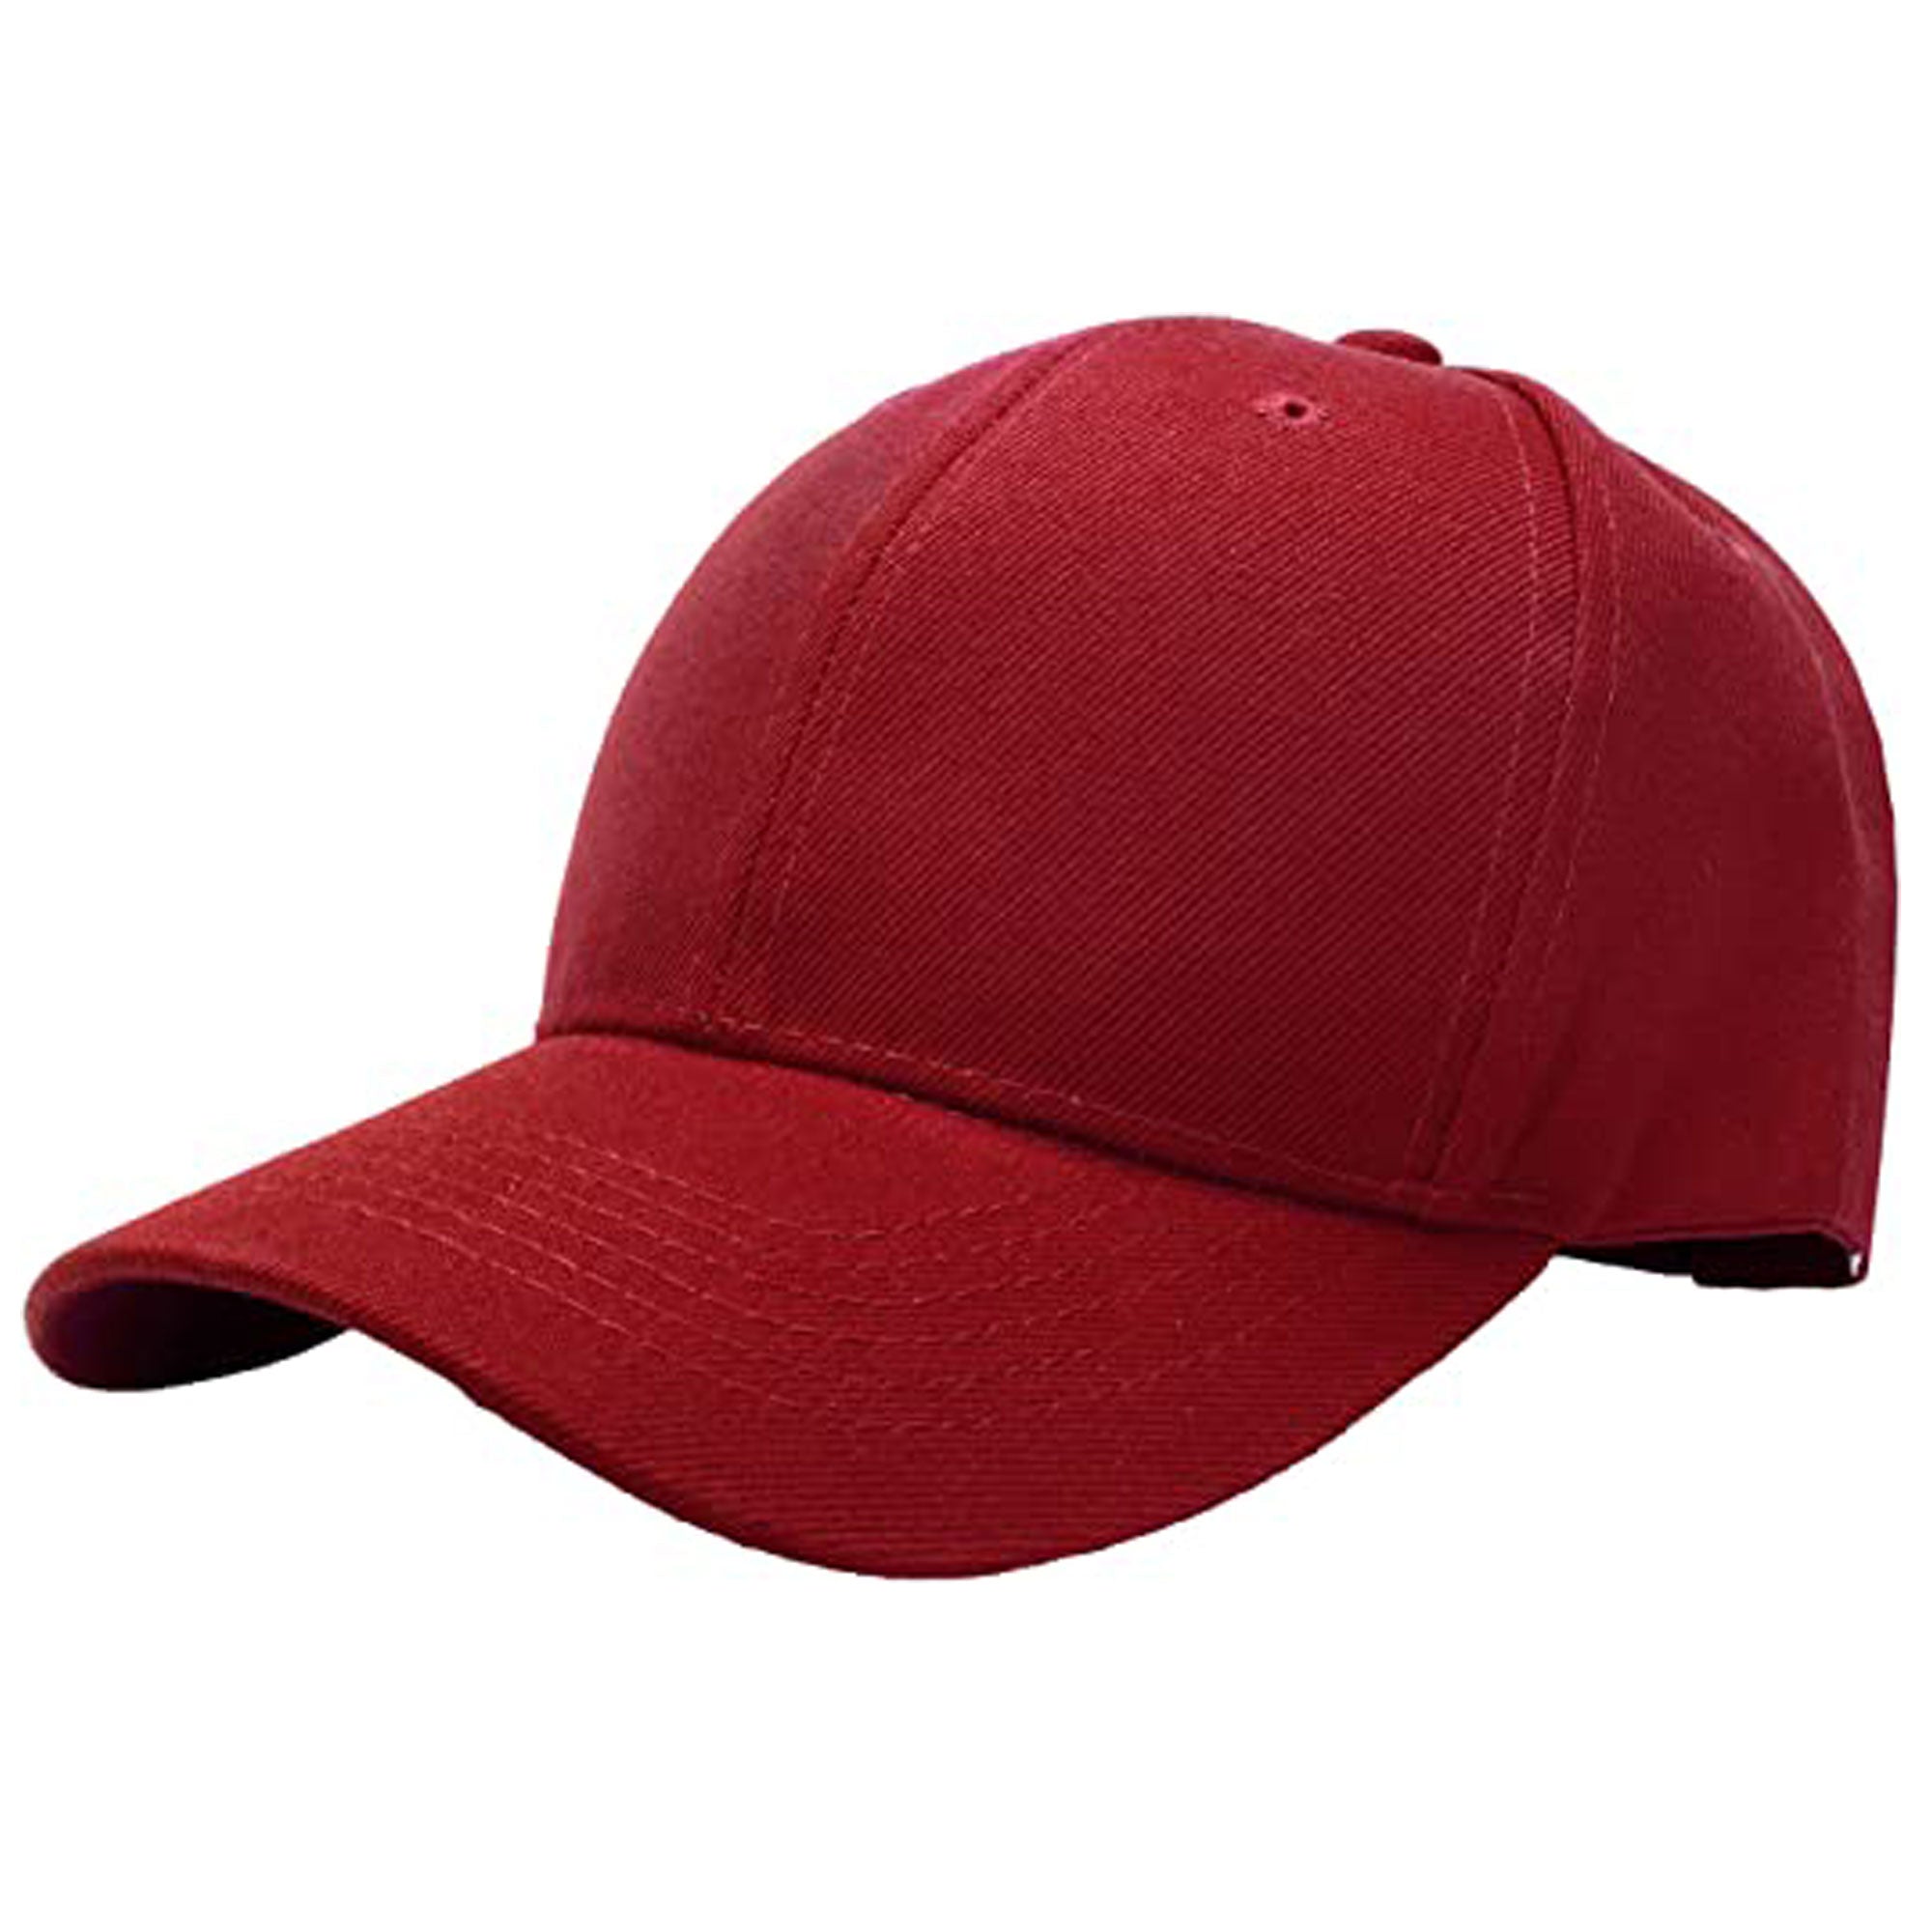 Blank Solid Color Adjustable Baseball Cap